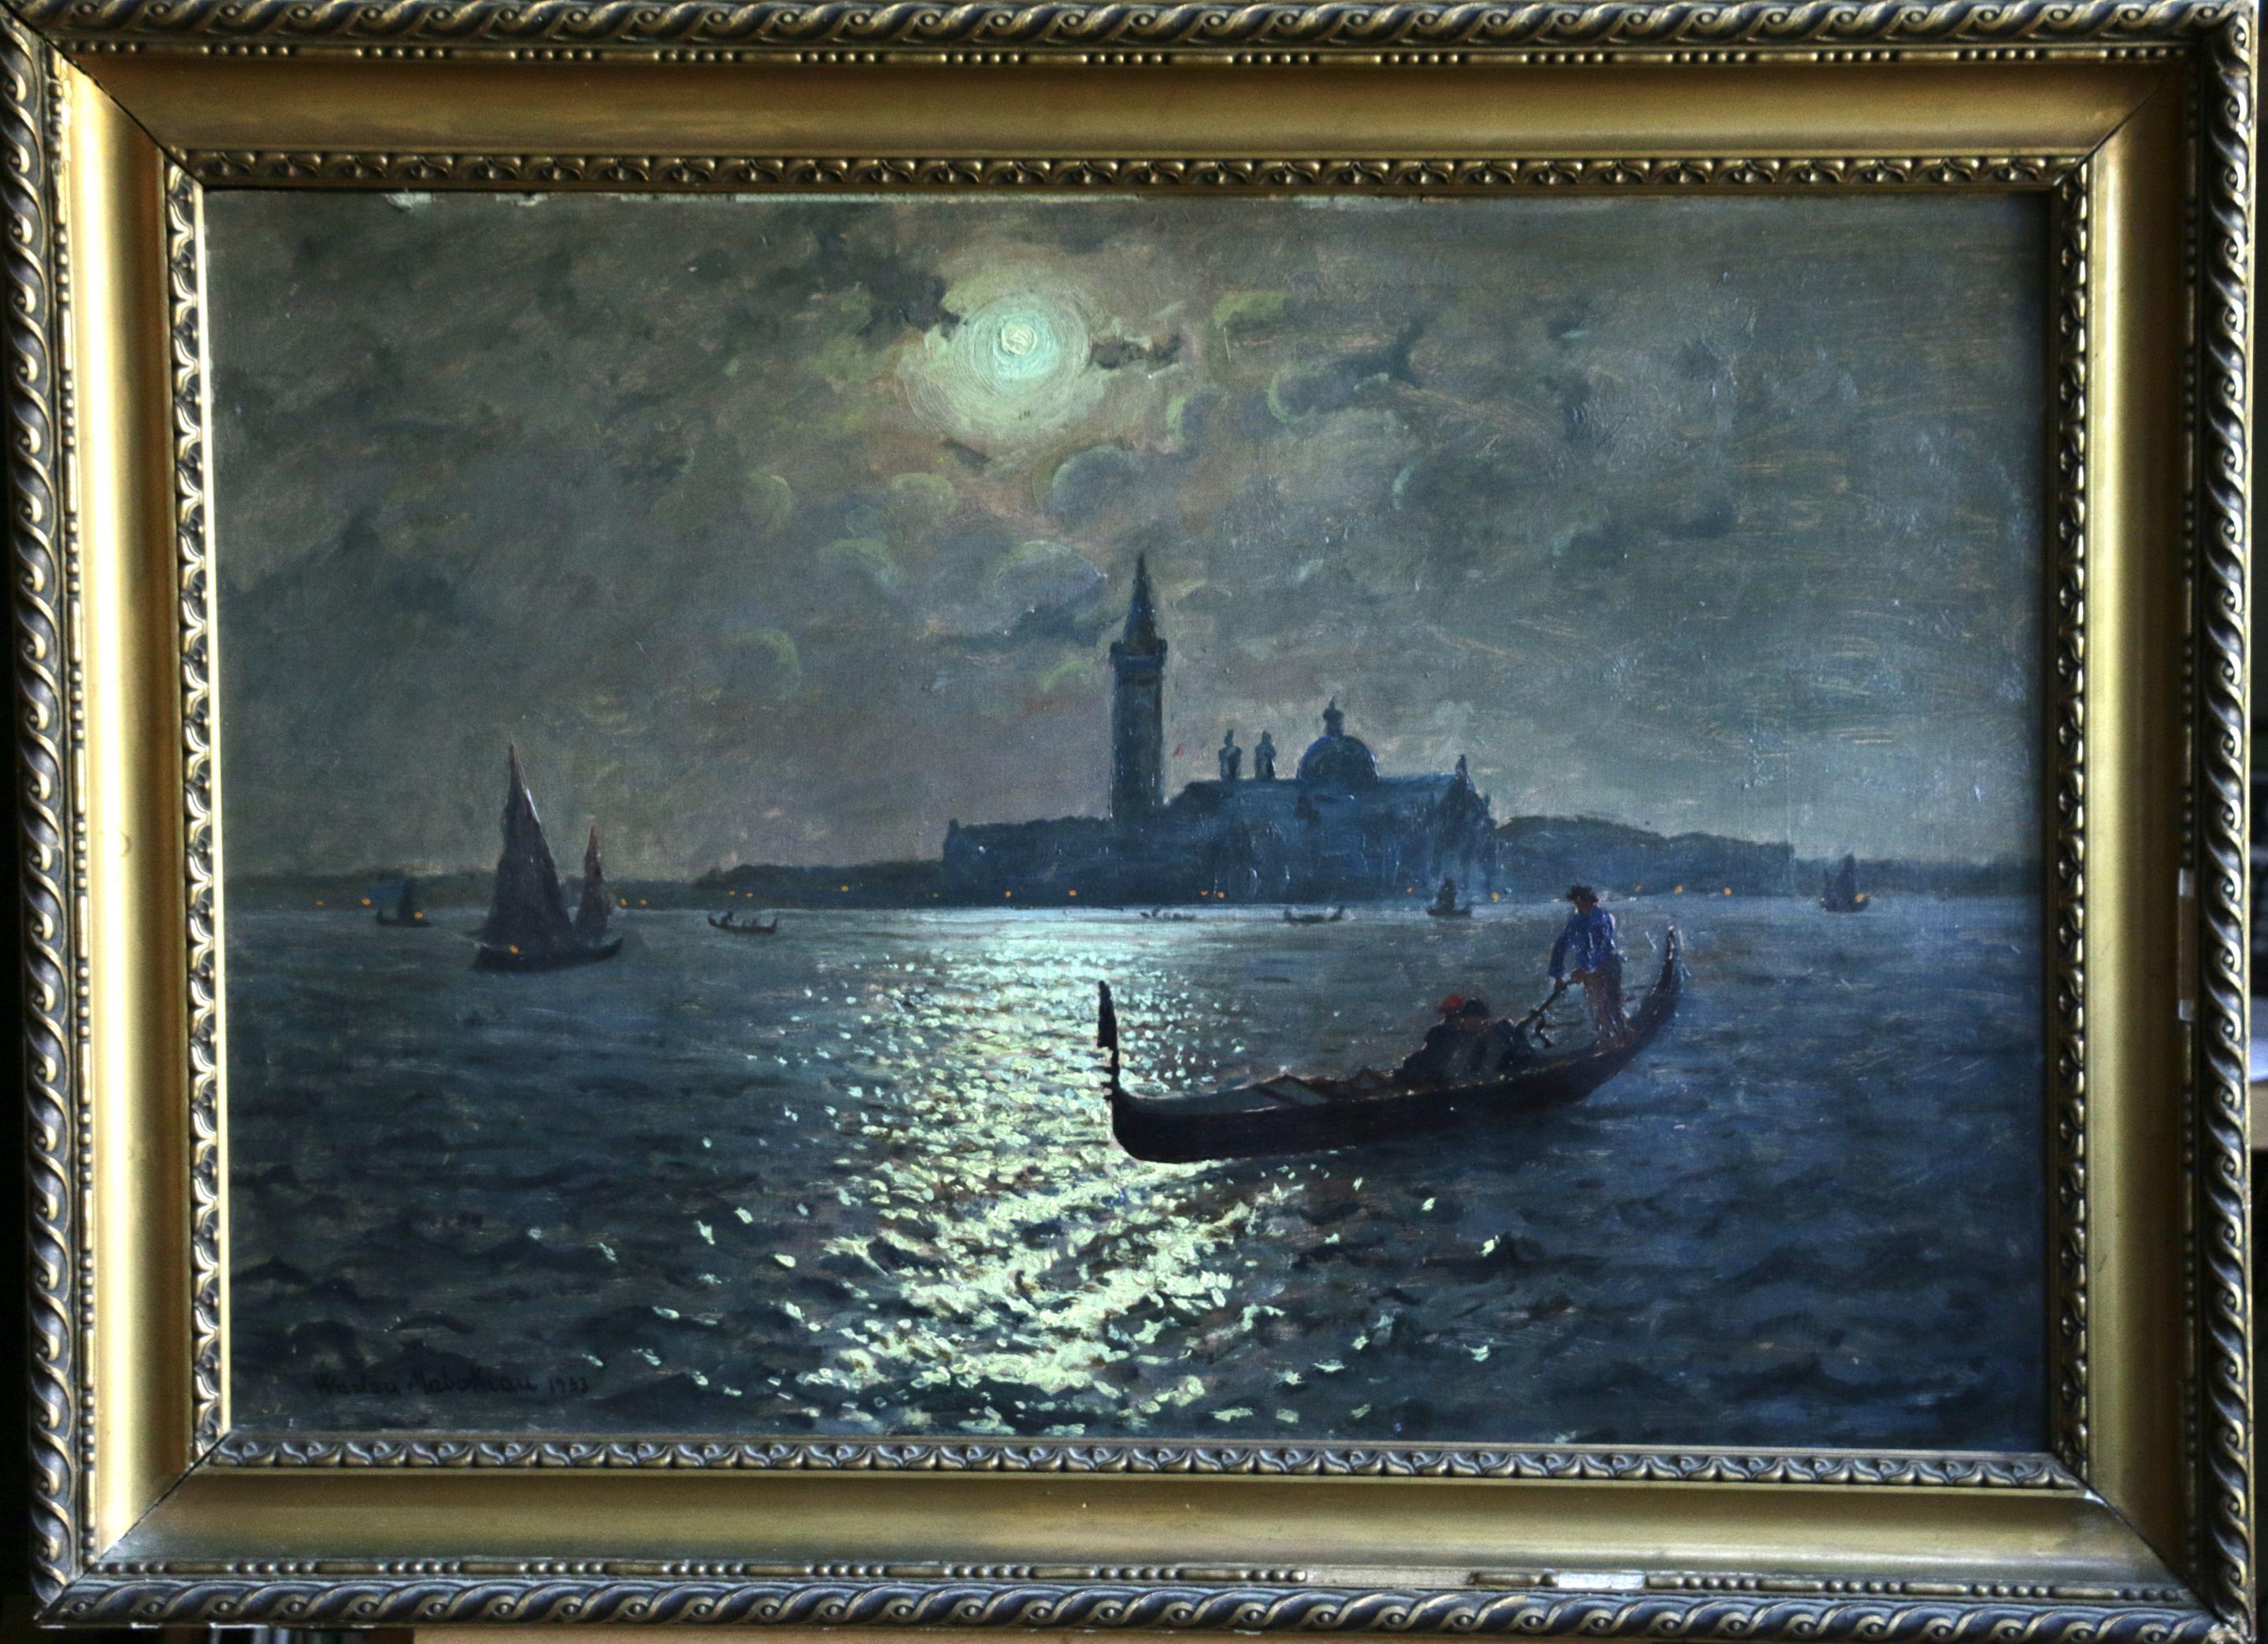 Venice by Moonlight - Painting by Vartan Makhokhian